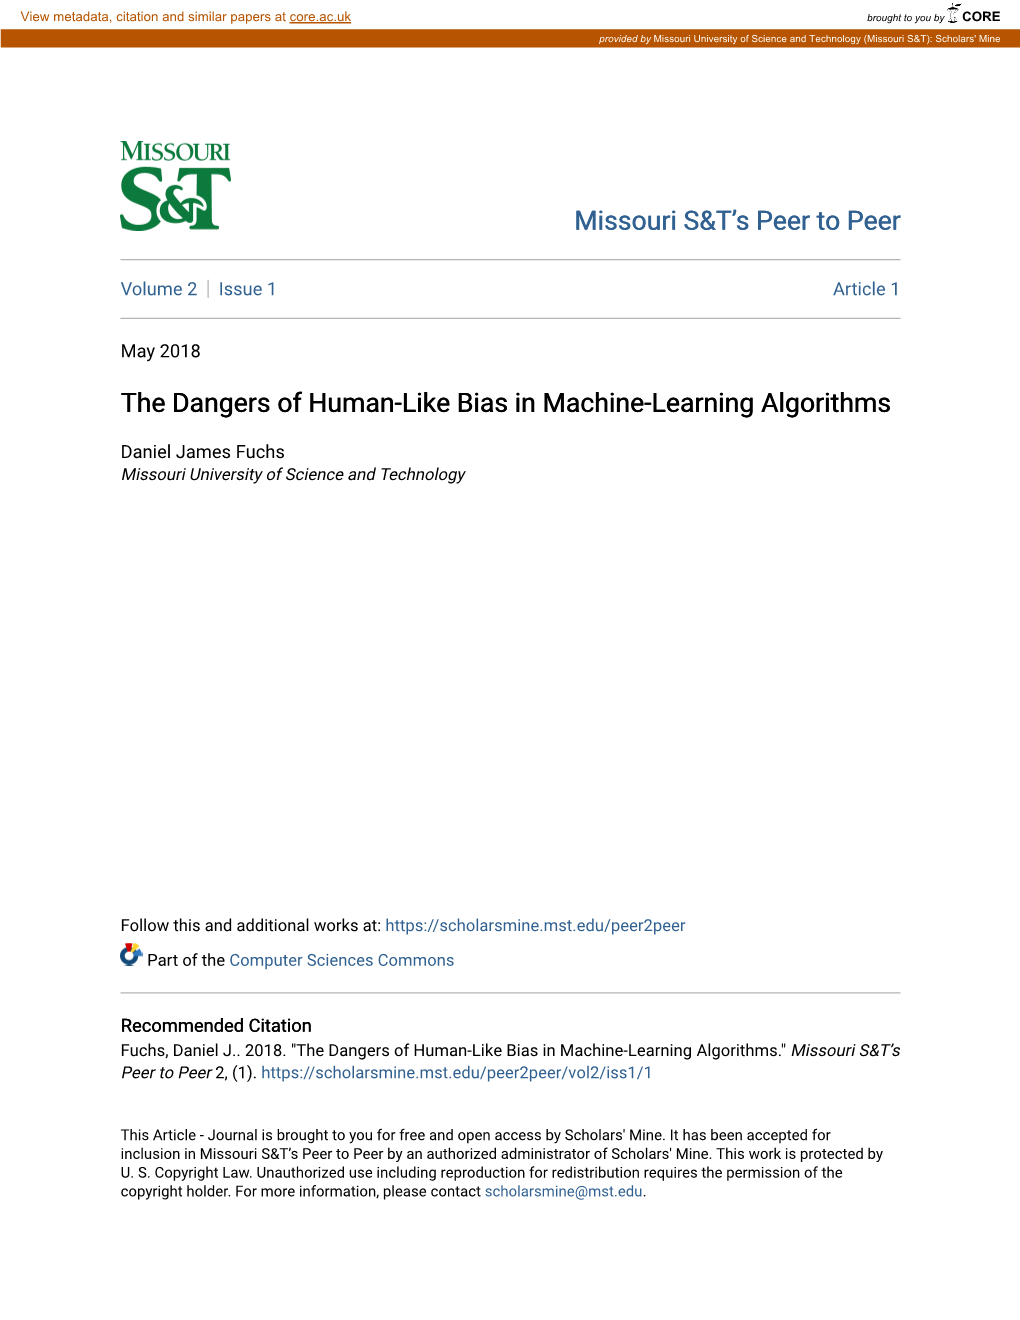 The Dangers of Human-Like Bias in Machine-Learning Algorithms